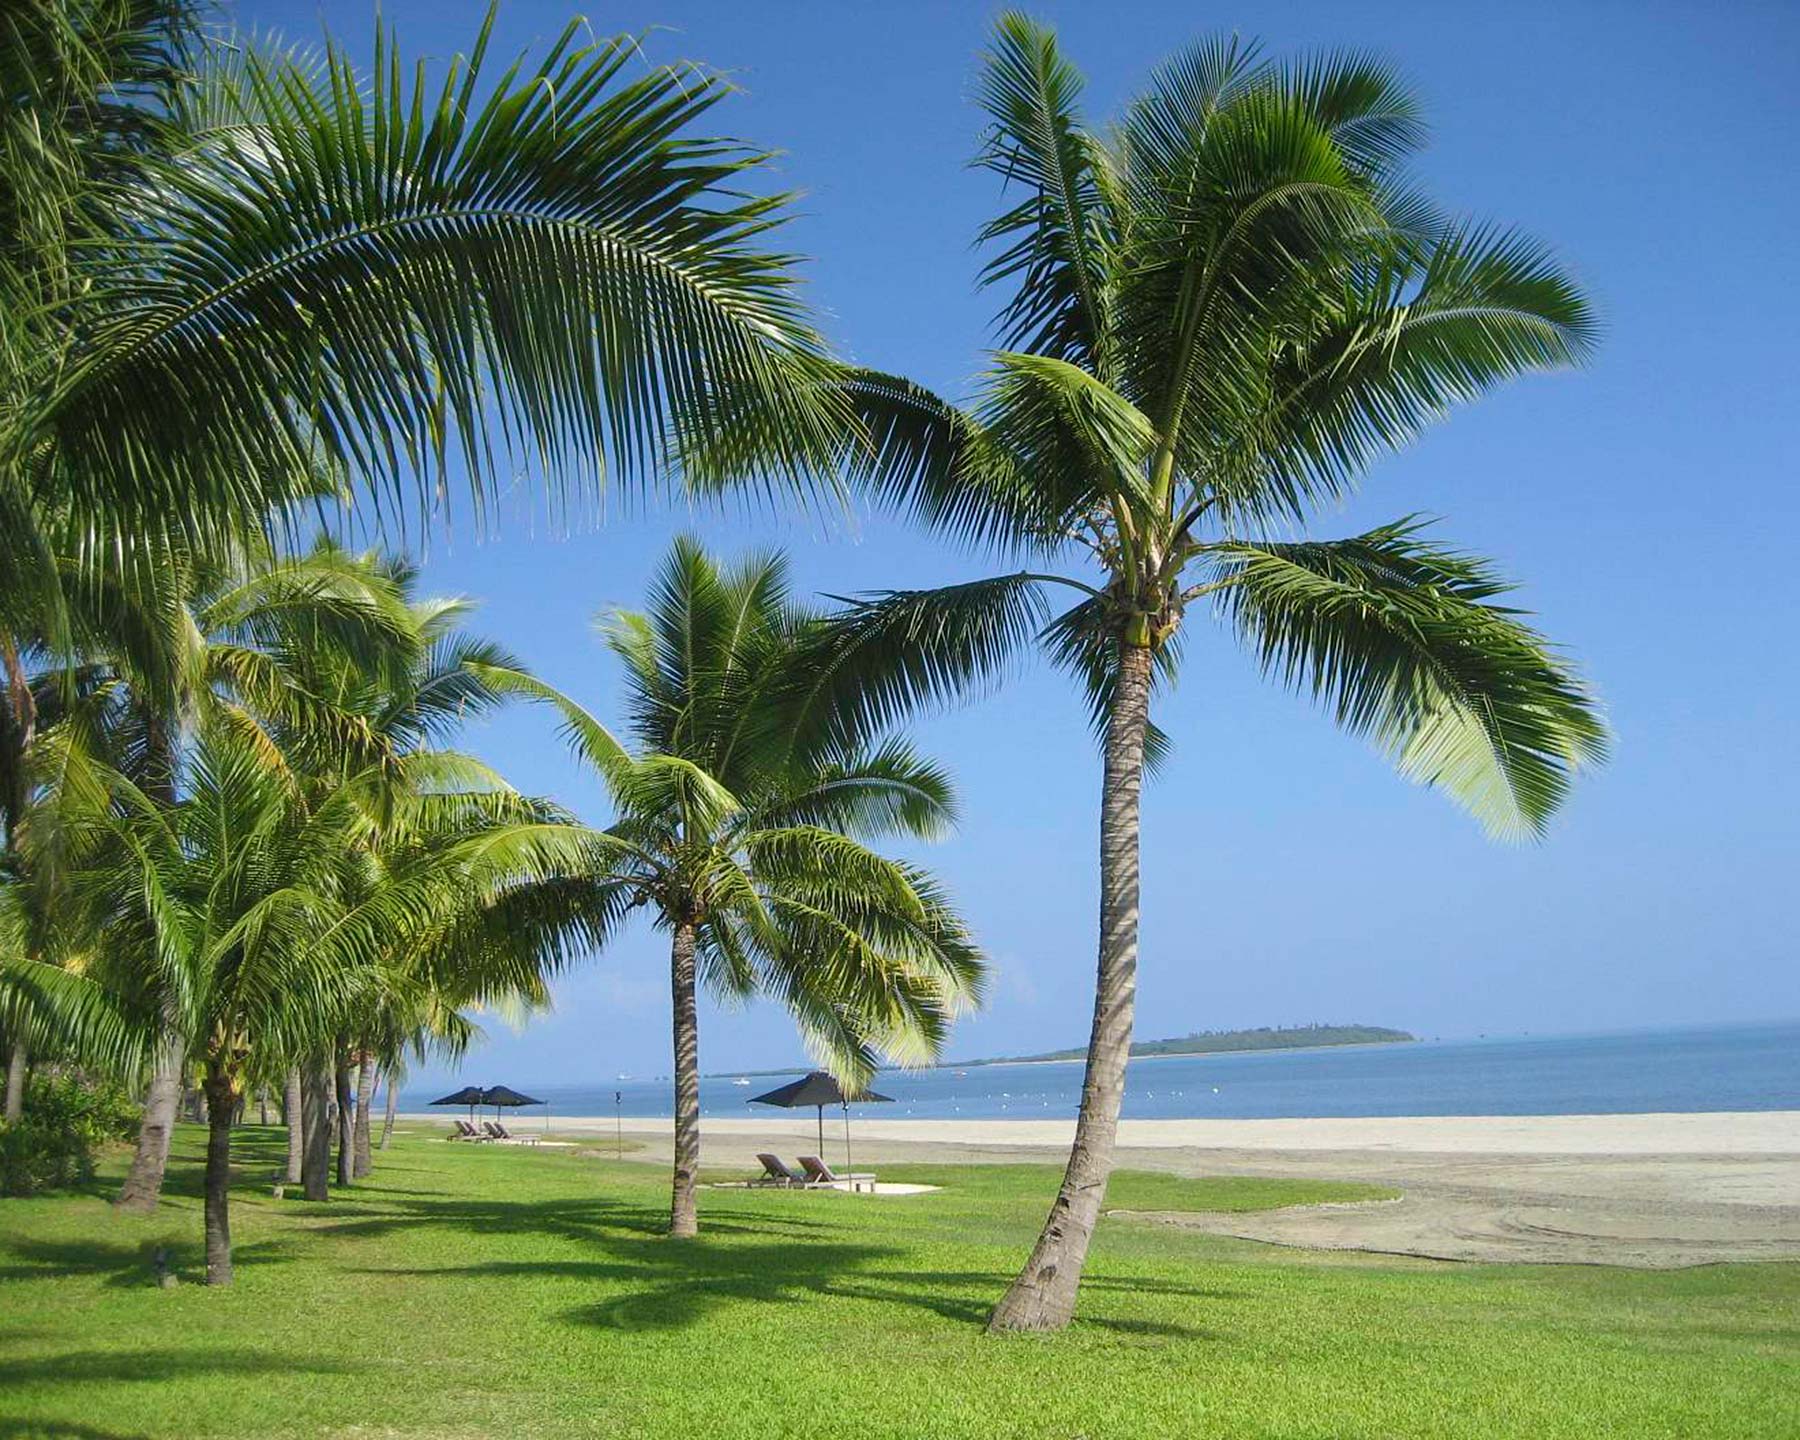 Cocos nucifera, the coconut palm